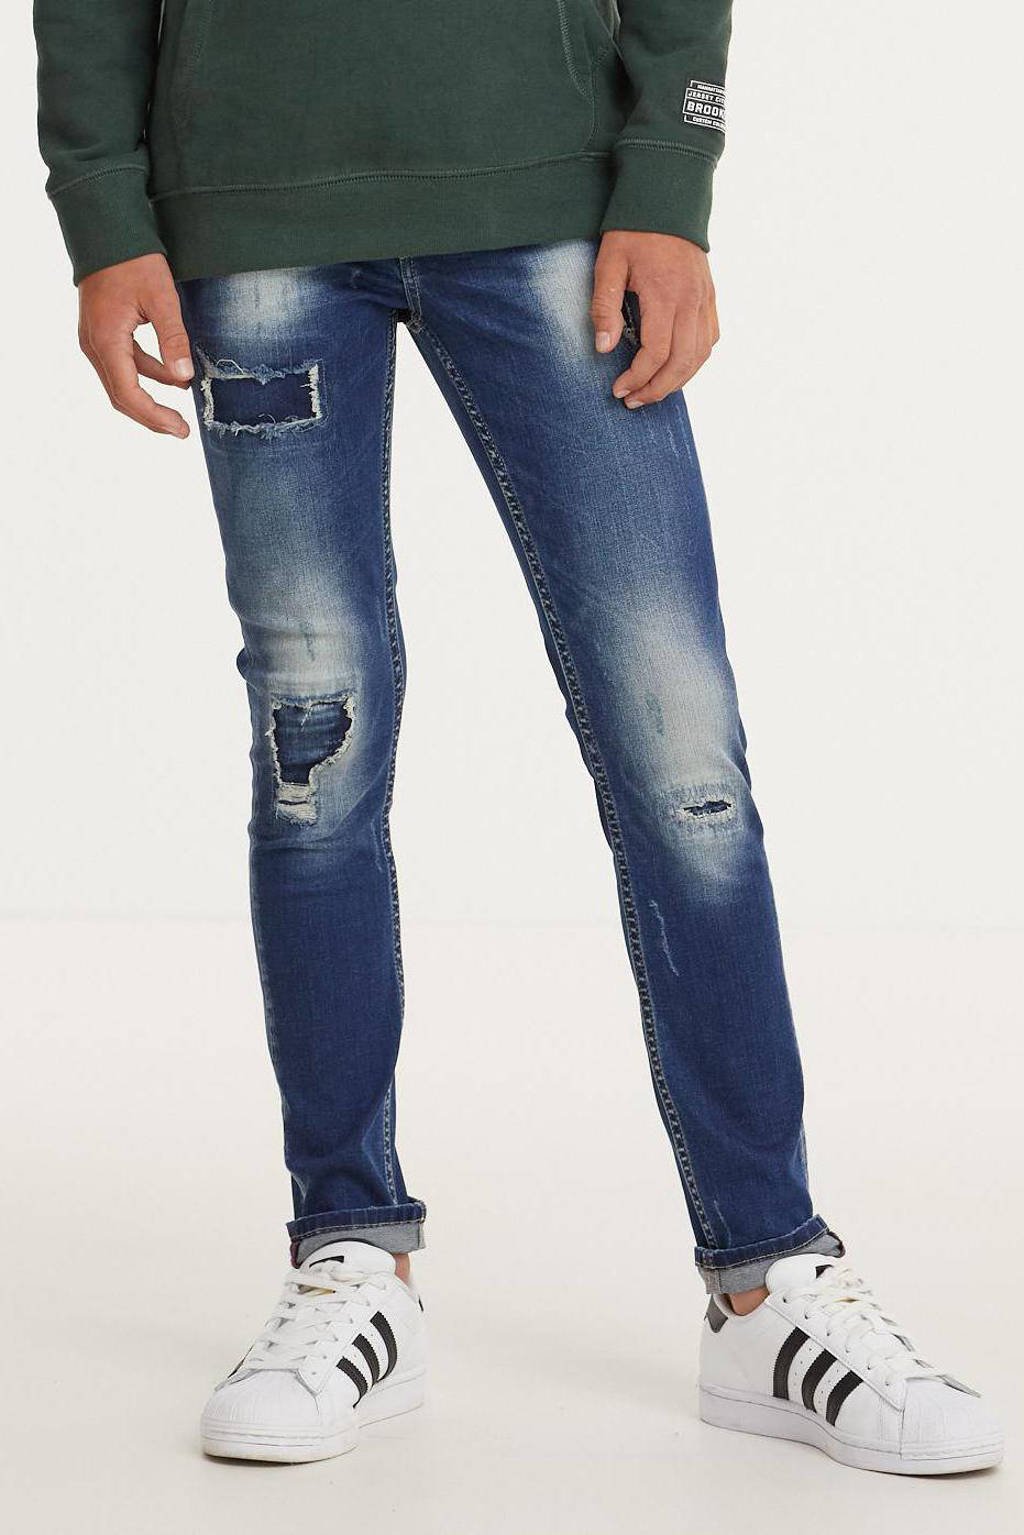 Raizzed skinny jeans Tokyo Crafted dark blue stone